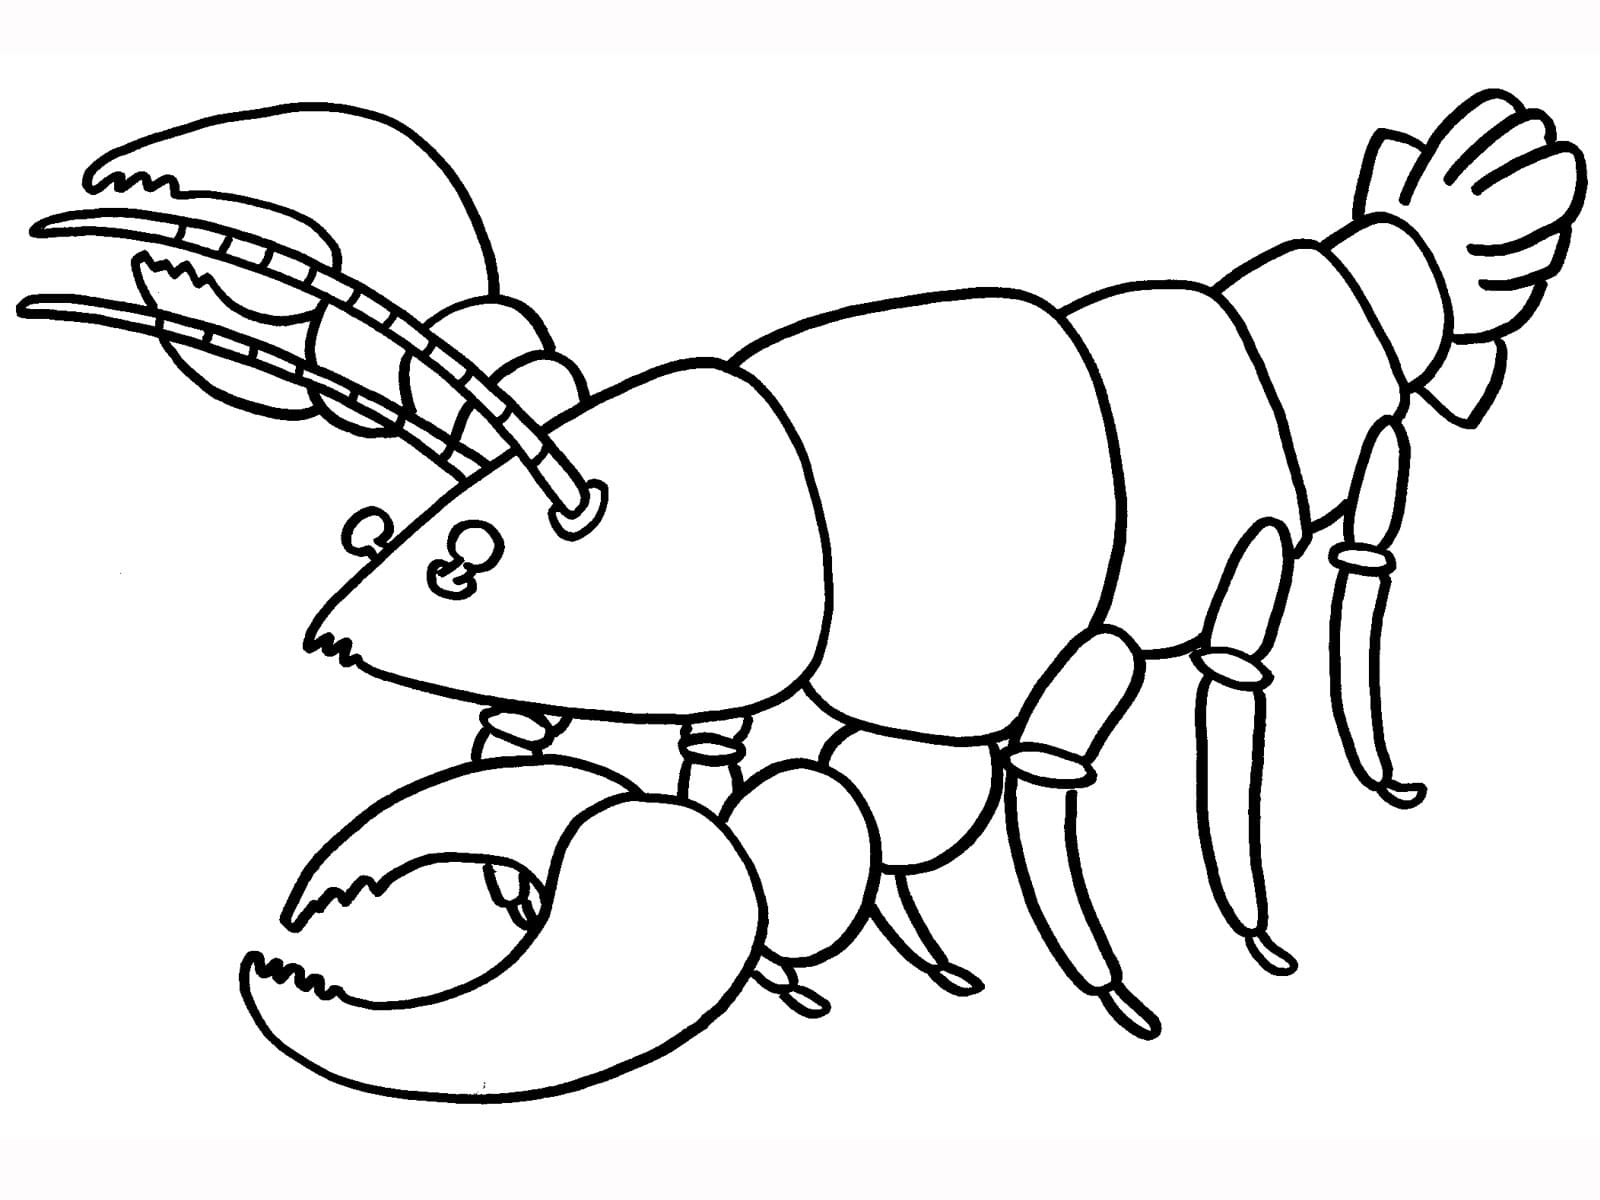 Cartoon Lobster Image